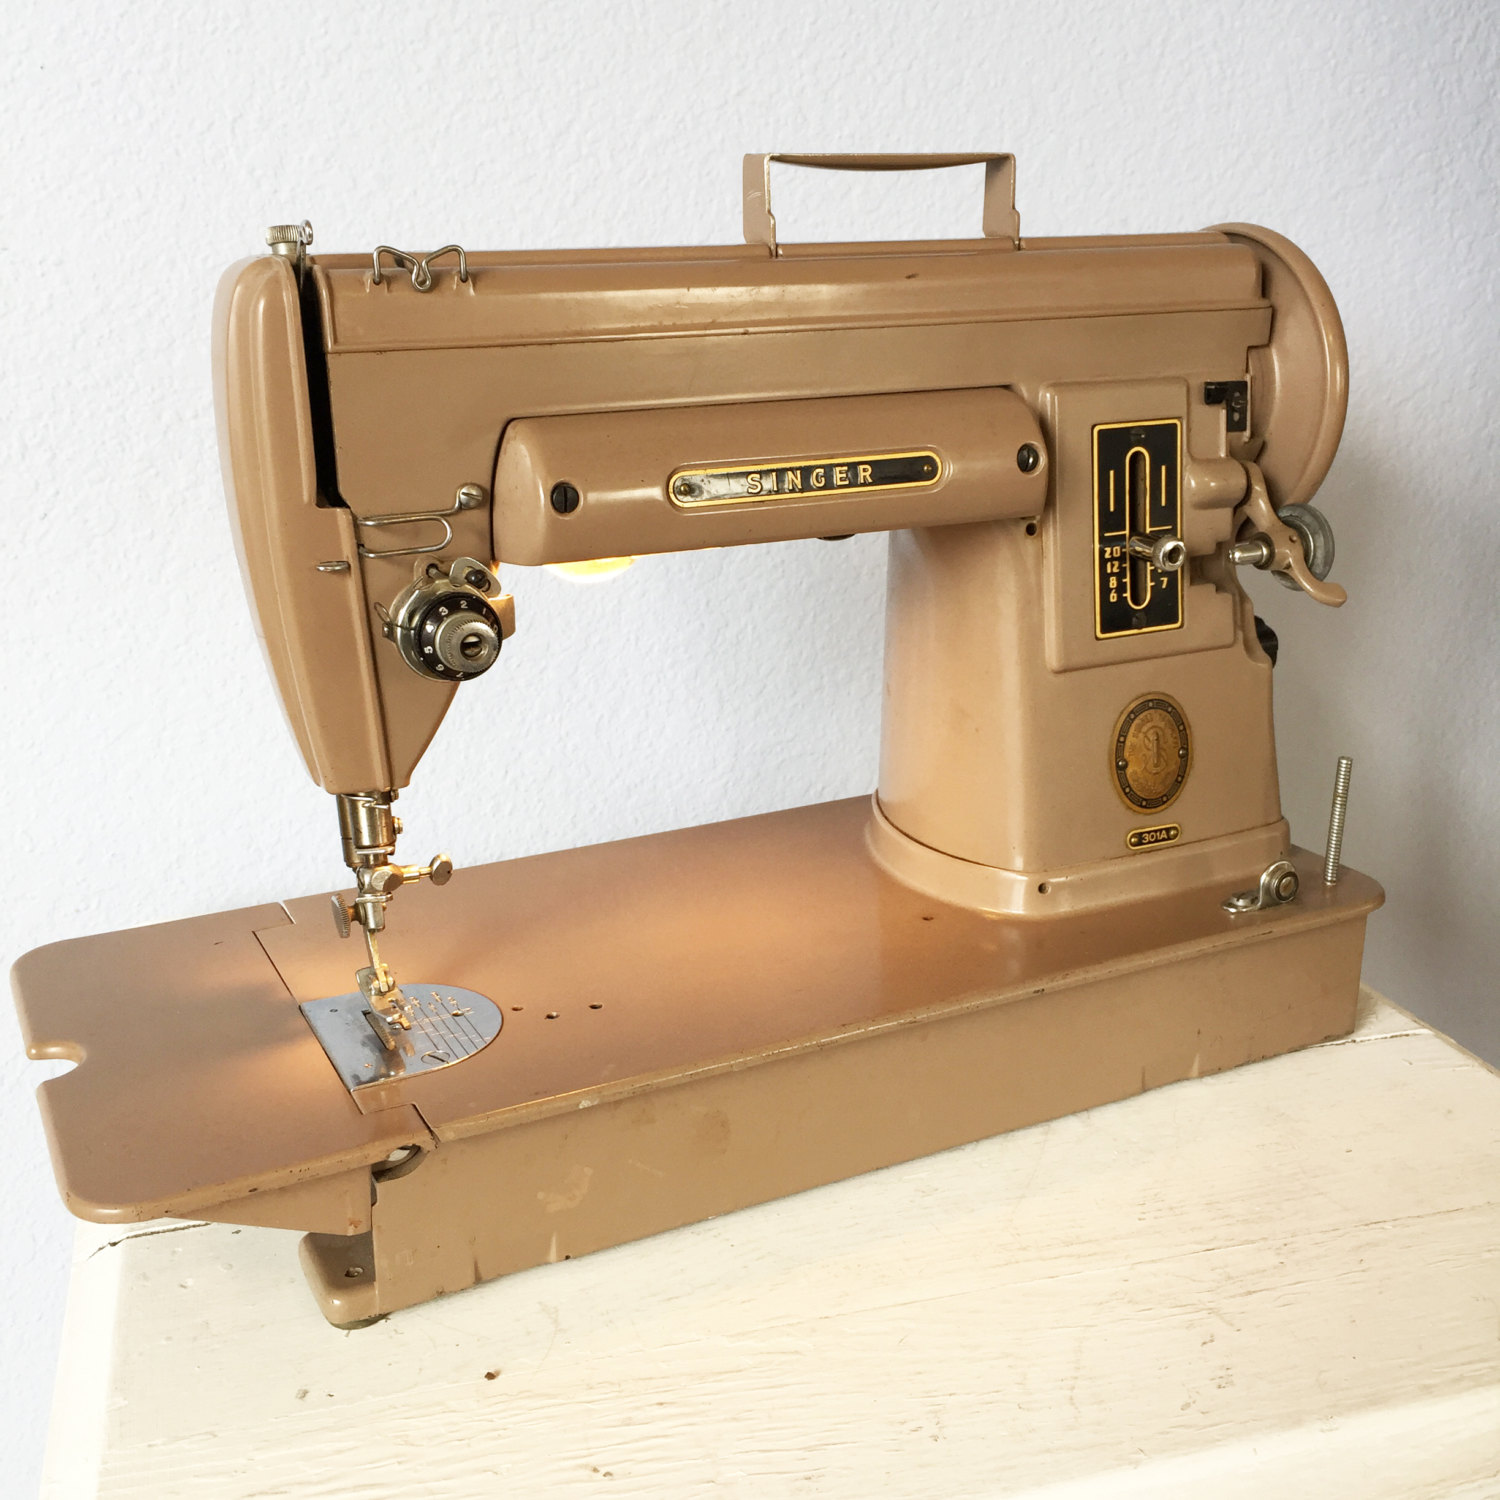 dating singer sewing machine serial numbers